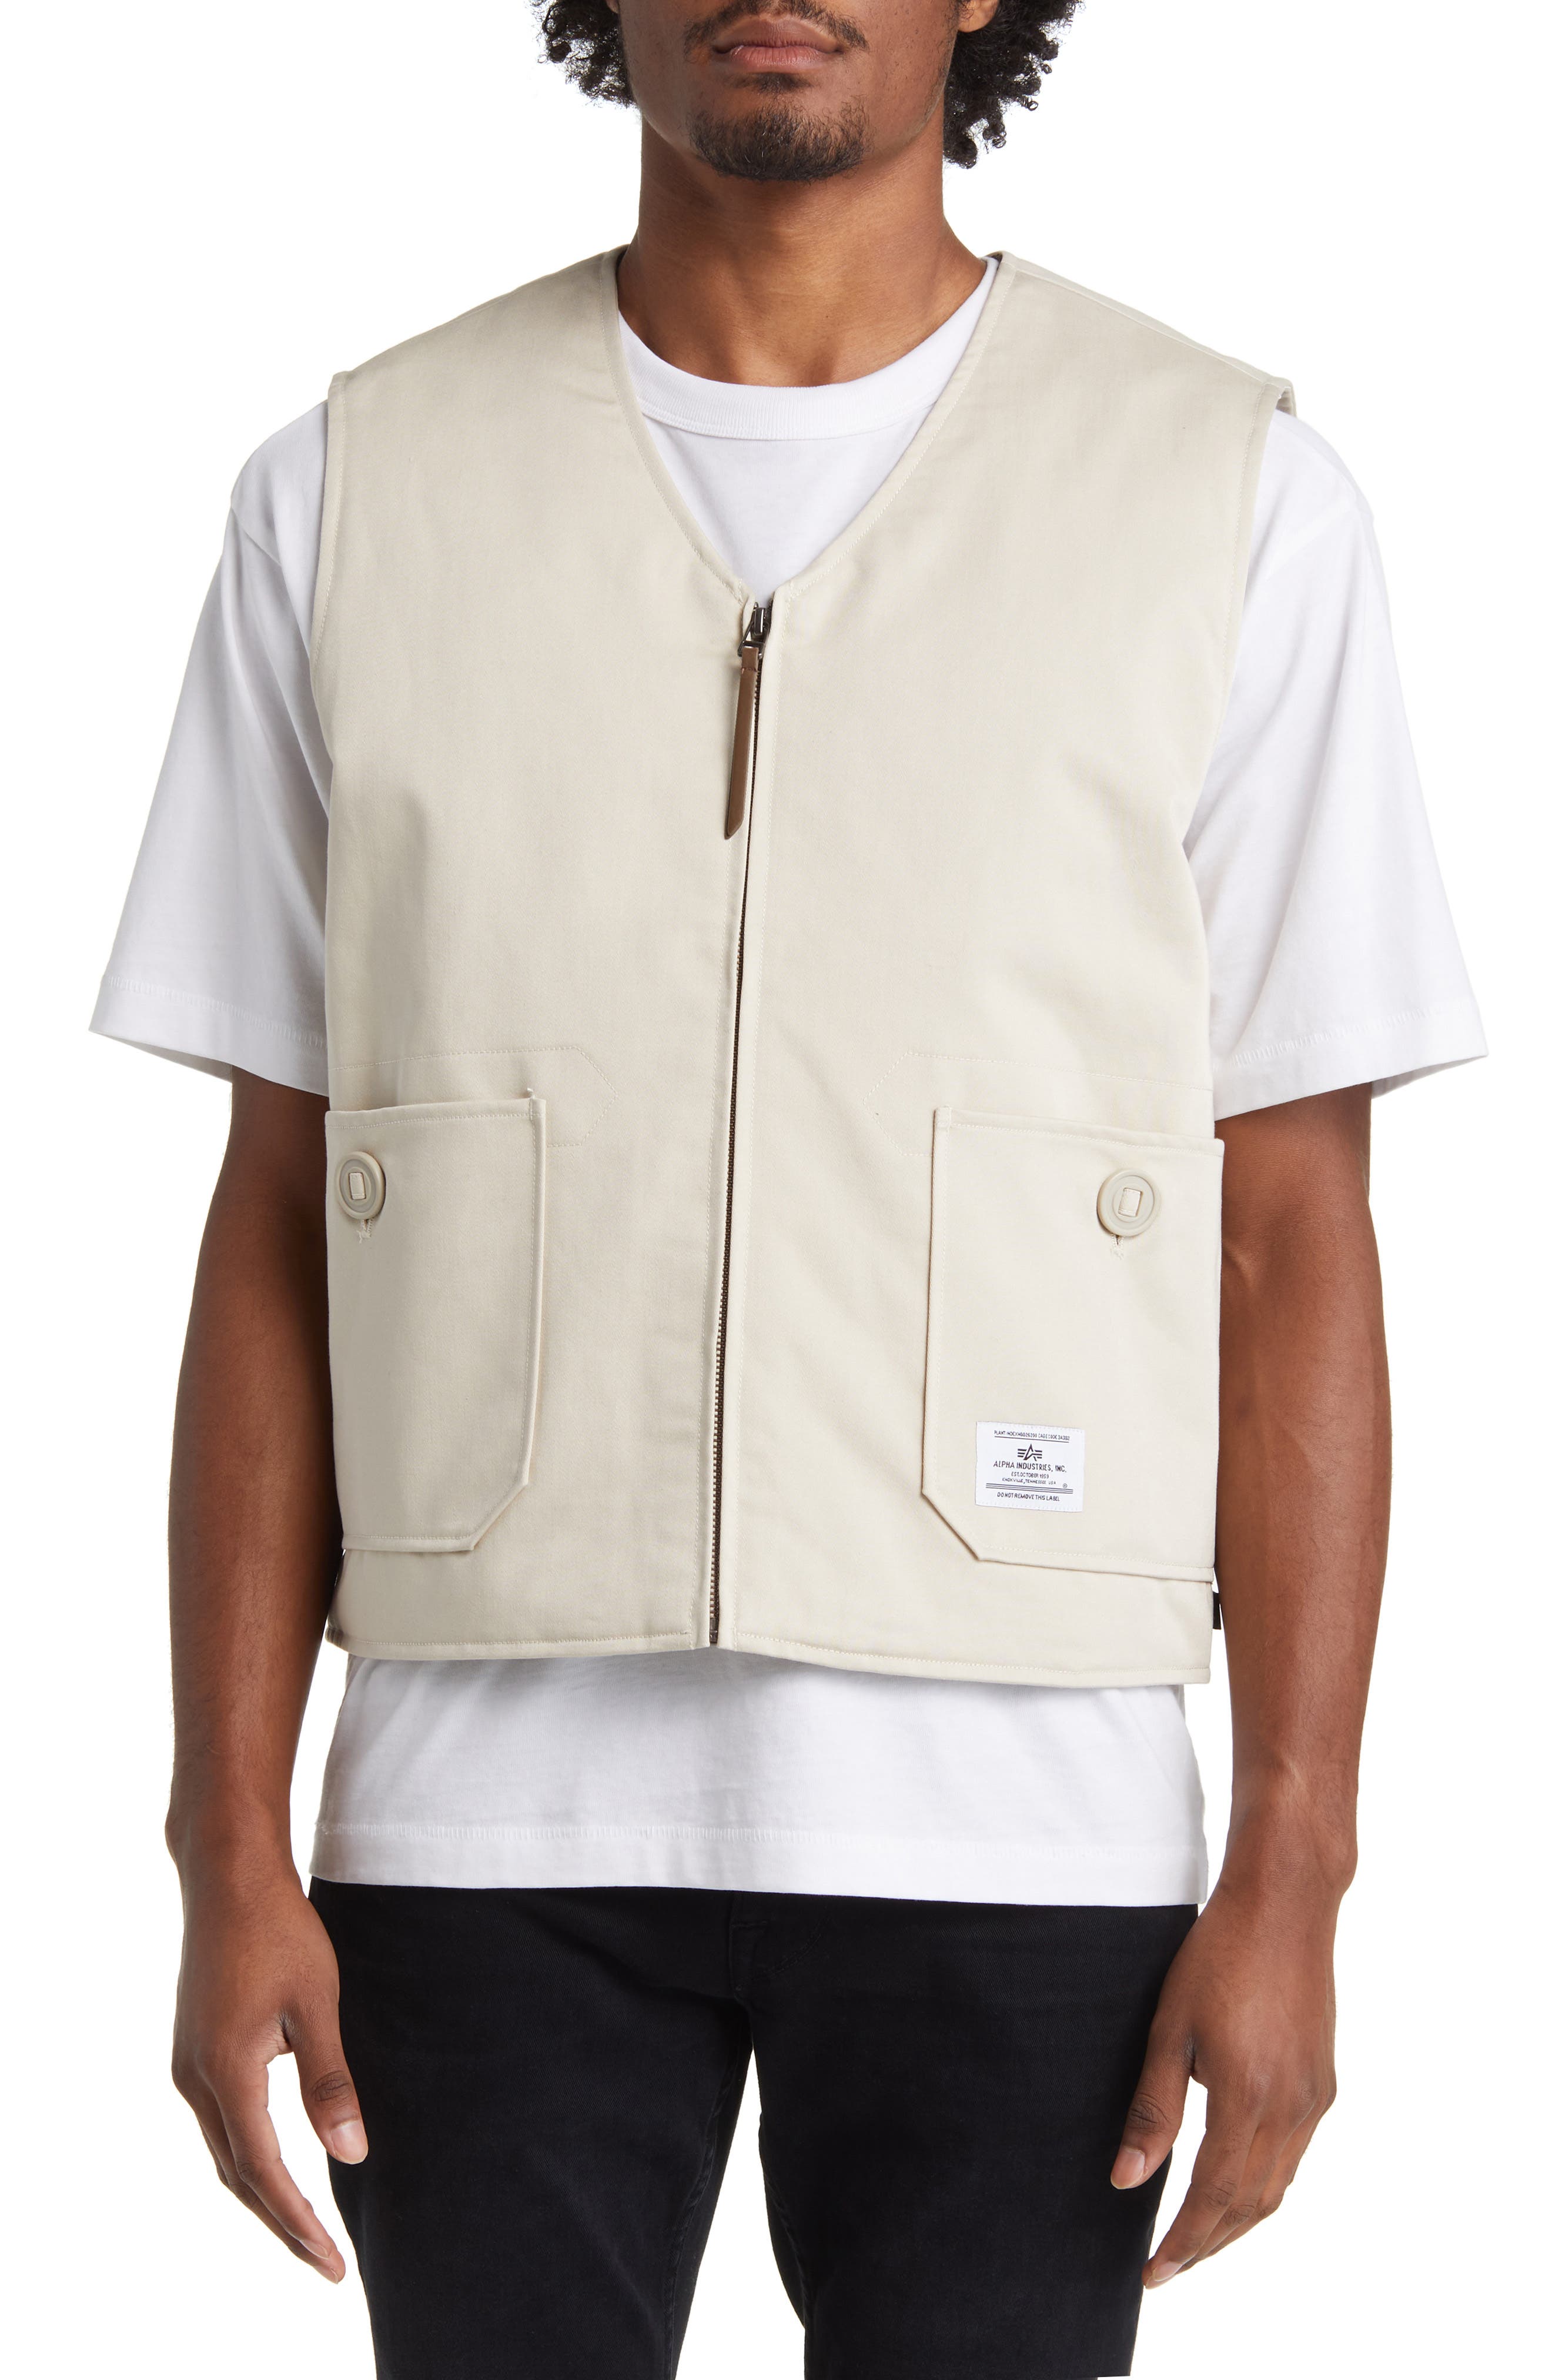 Alpha Industries Men's Als/92 Mid Length Zip Liner Jacket with Pockets, Olive, L